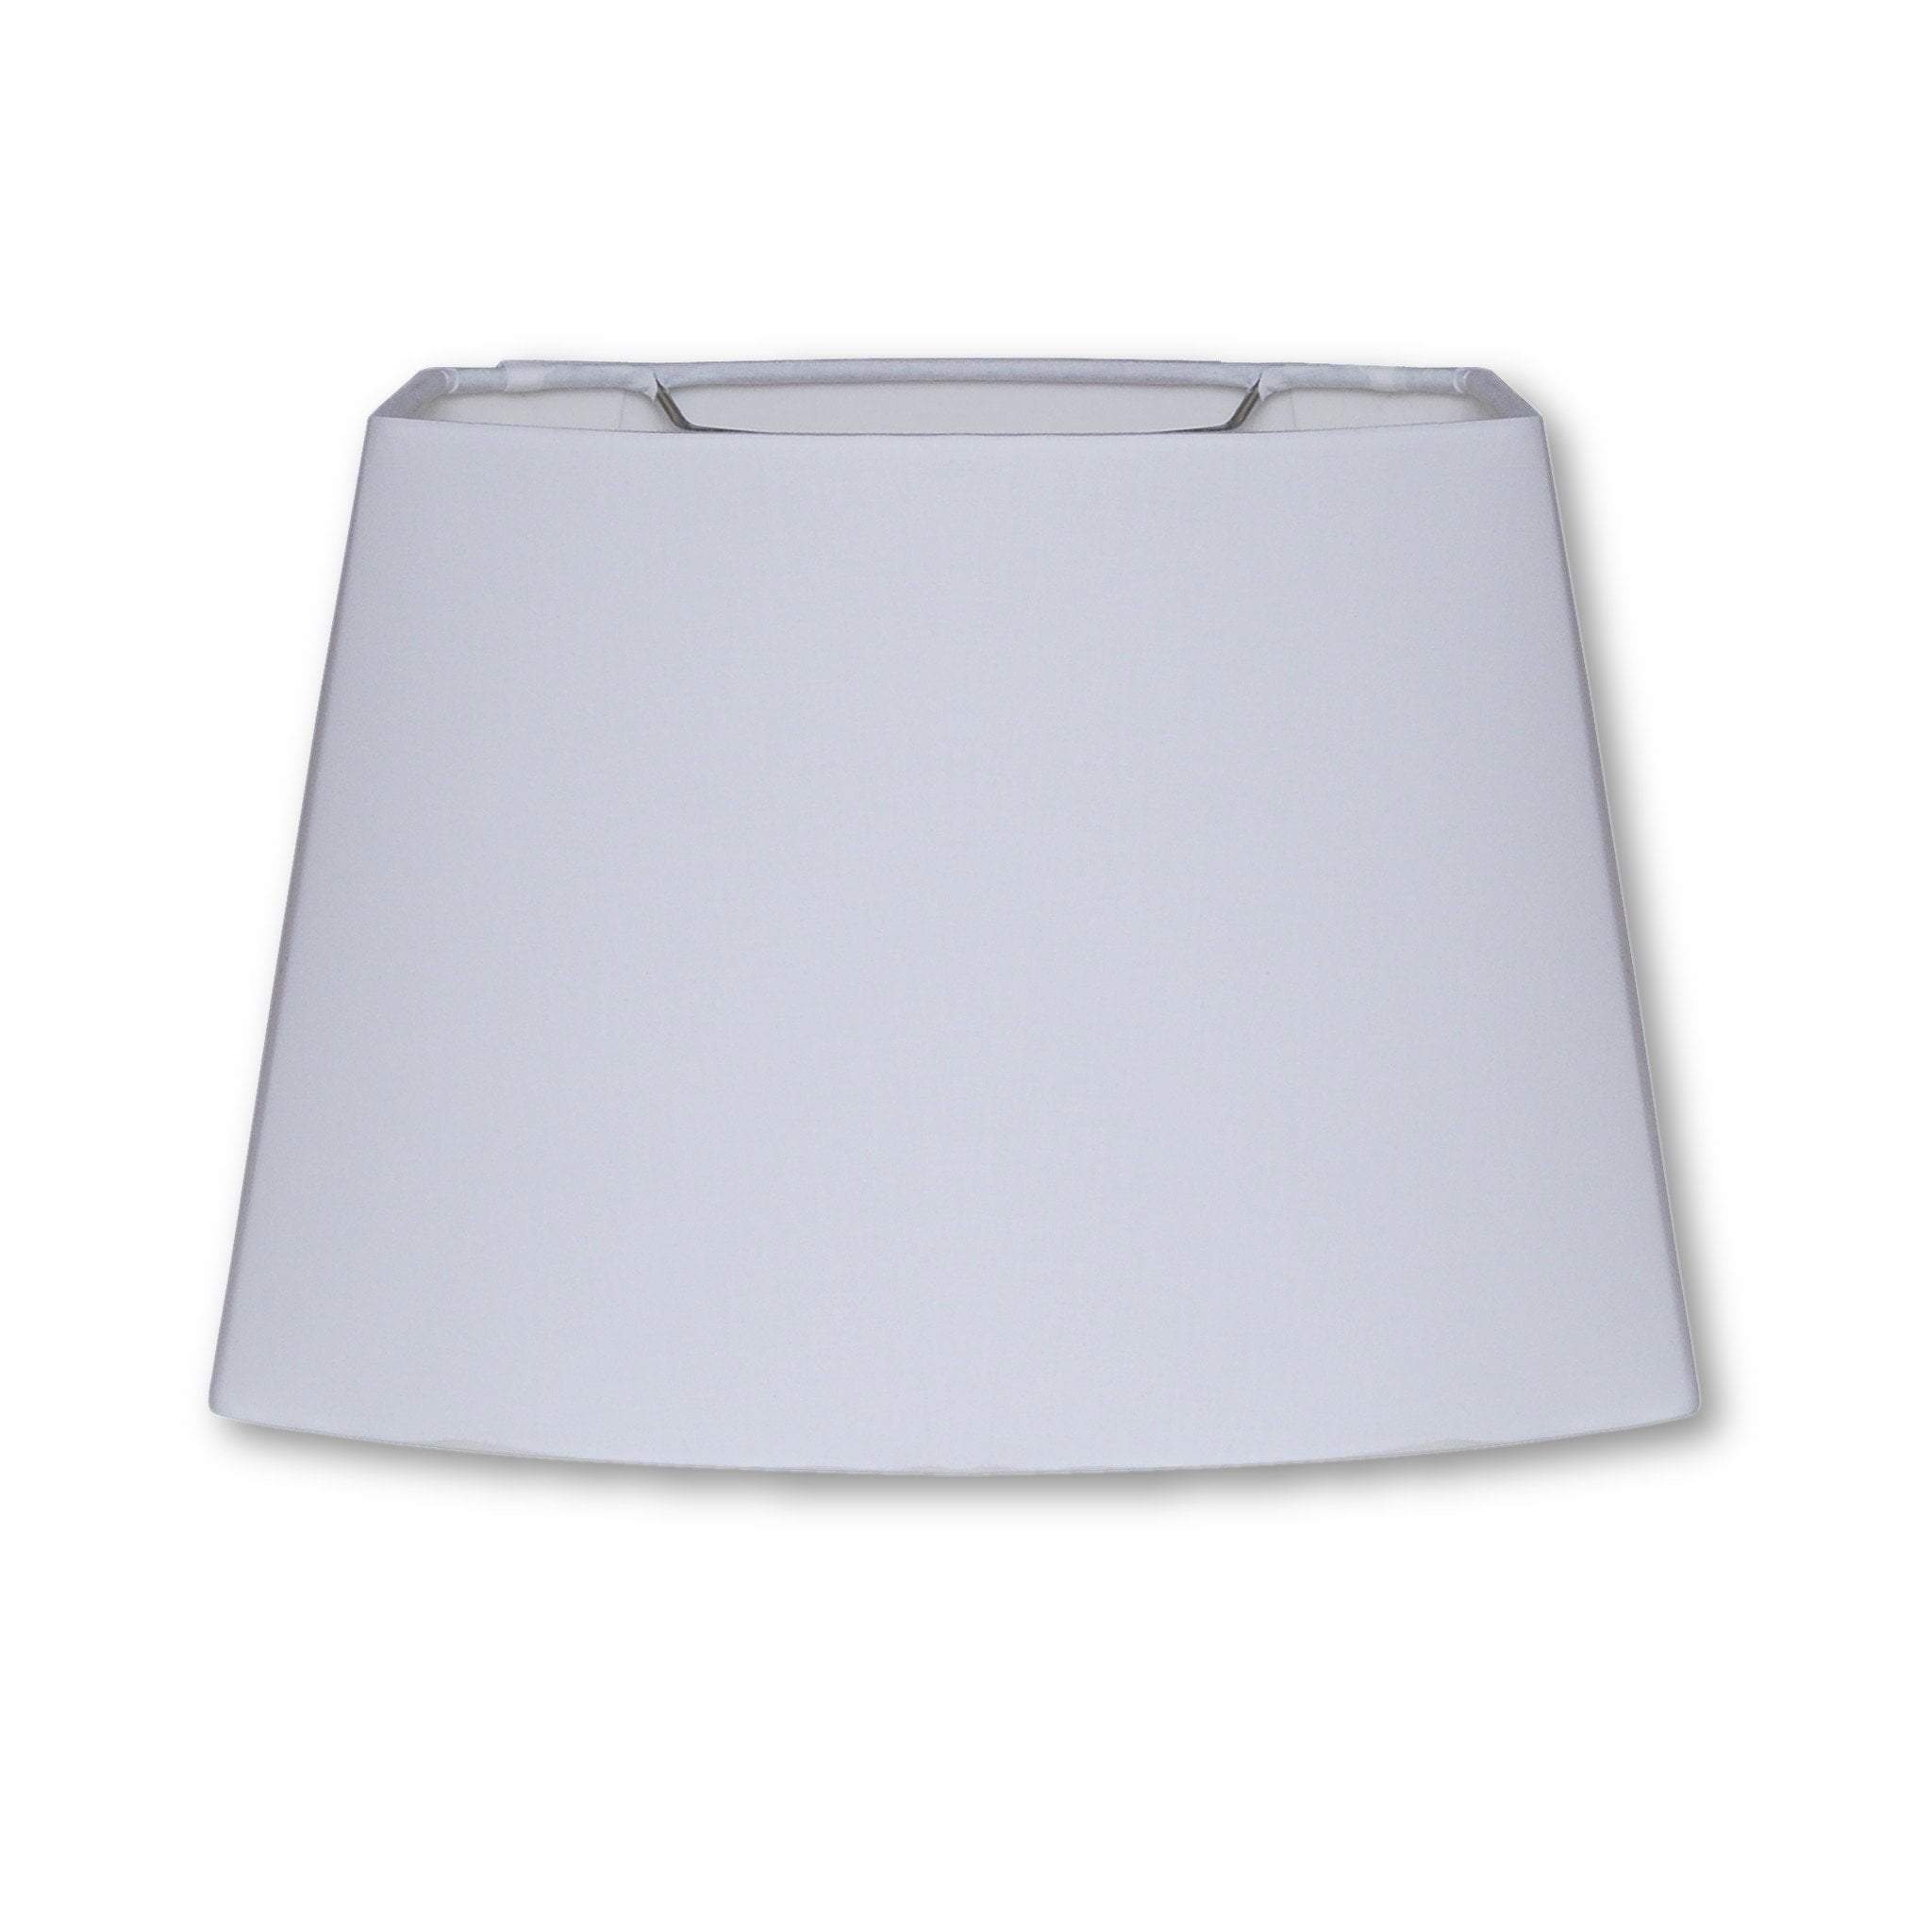 lamp shade (6 x 8.5) x ( 7 x 11) 7.5'' / Handkerchief Cotton Linen / White Rectangle Oval Hardback Linen Lamp Shade